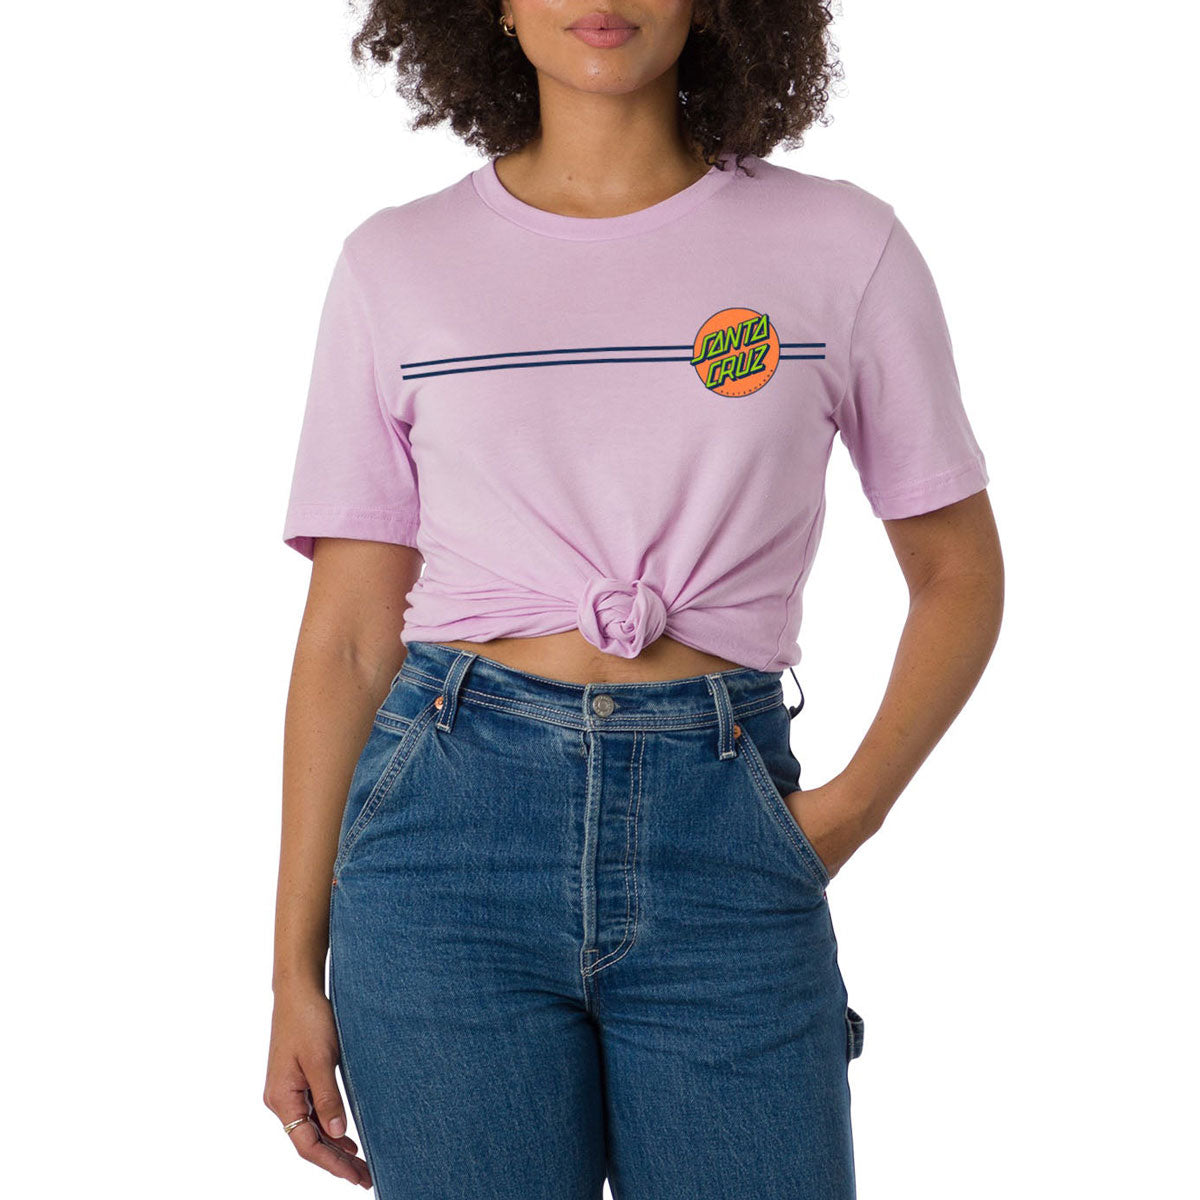 Santa Cruz Womens Other Dot Boyfriend T-Shirt - Lilac image 1